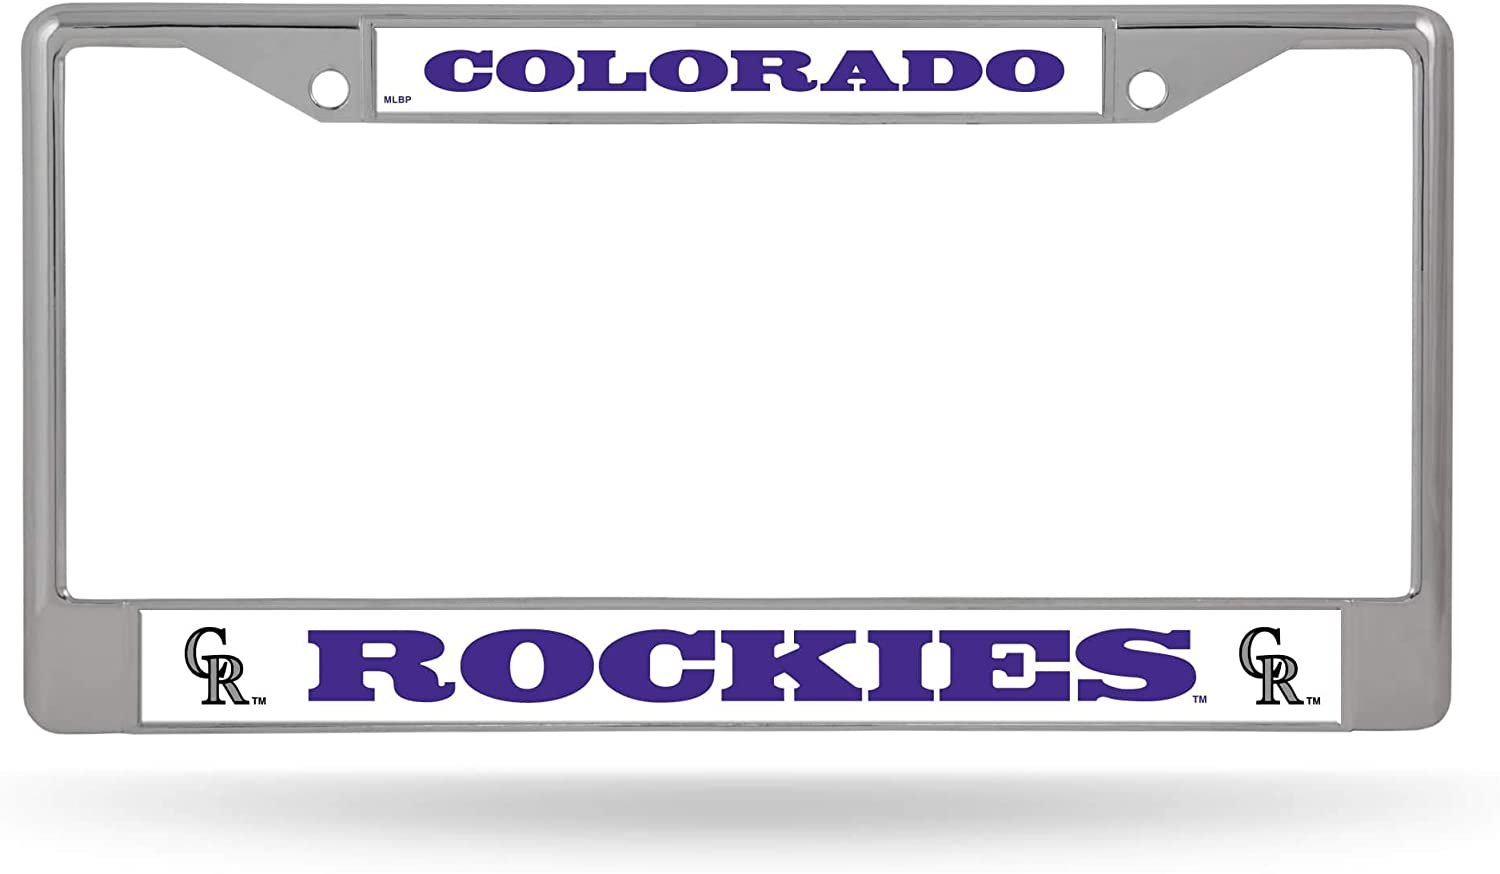 Colorado Rockies Metal License Plate Frame Chrome Tag Cover, 12x6 Inch